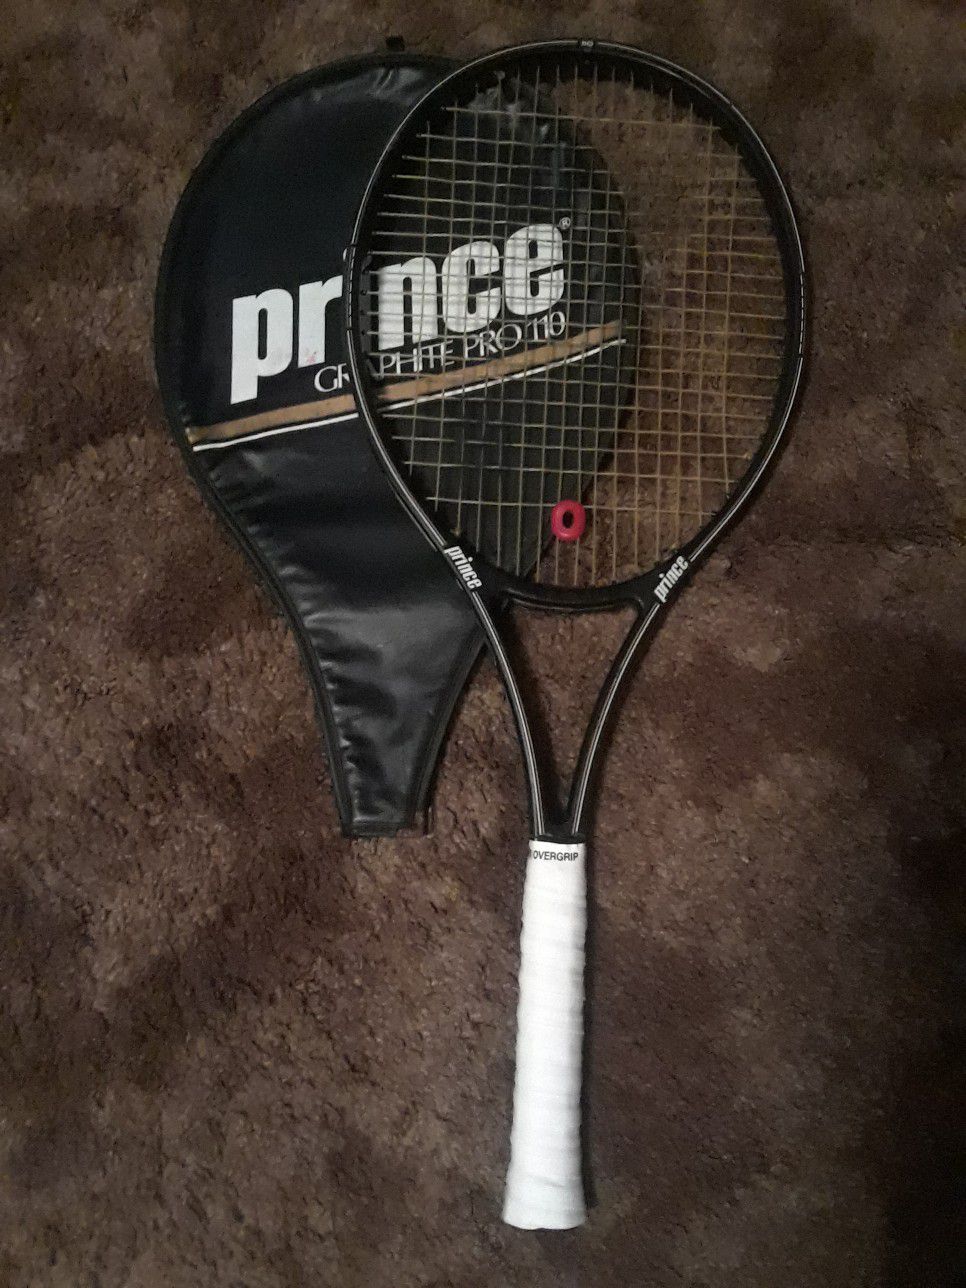 Prince Graphite Pro tennis racket